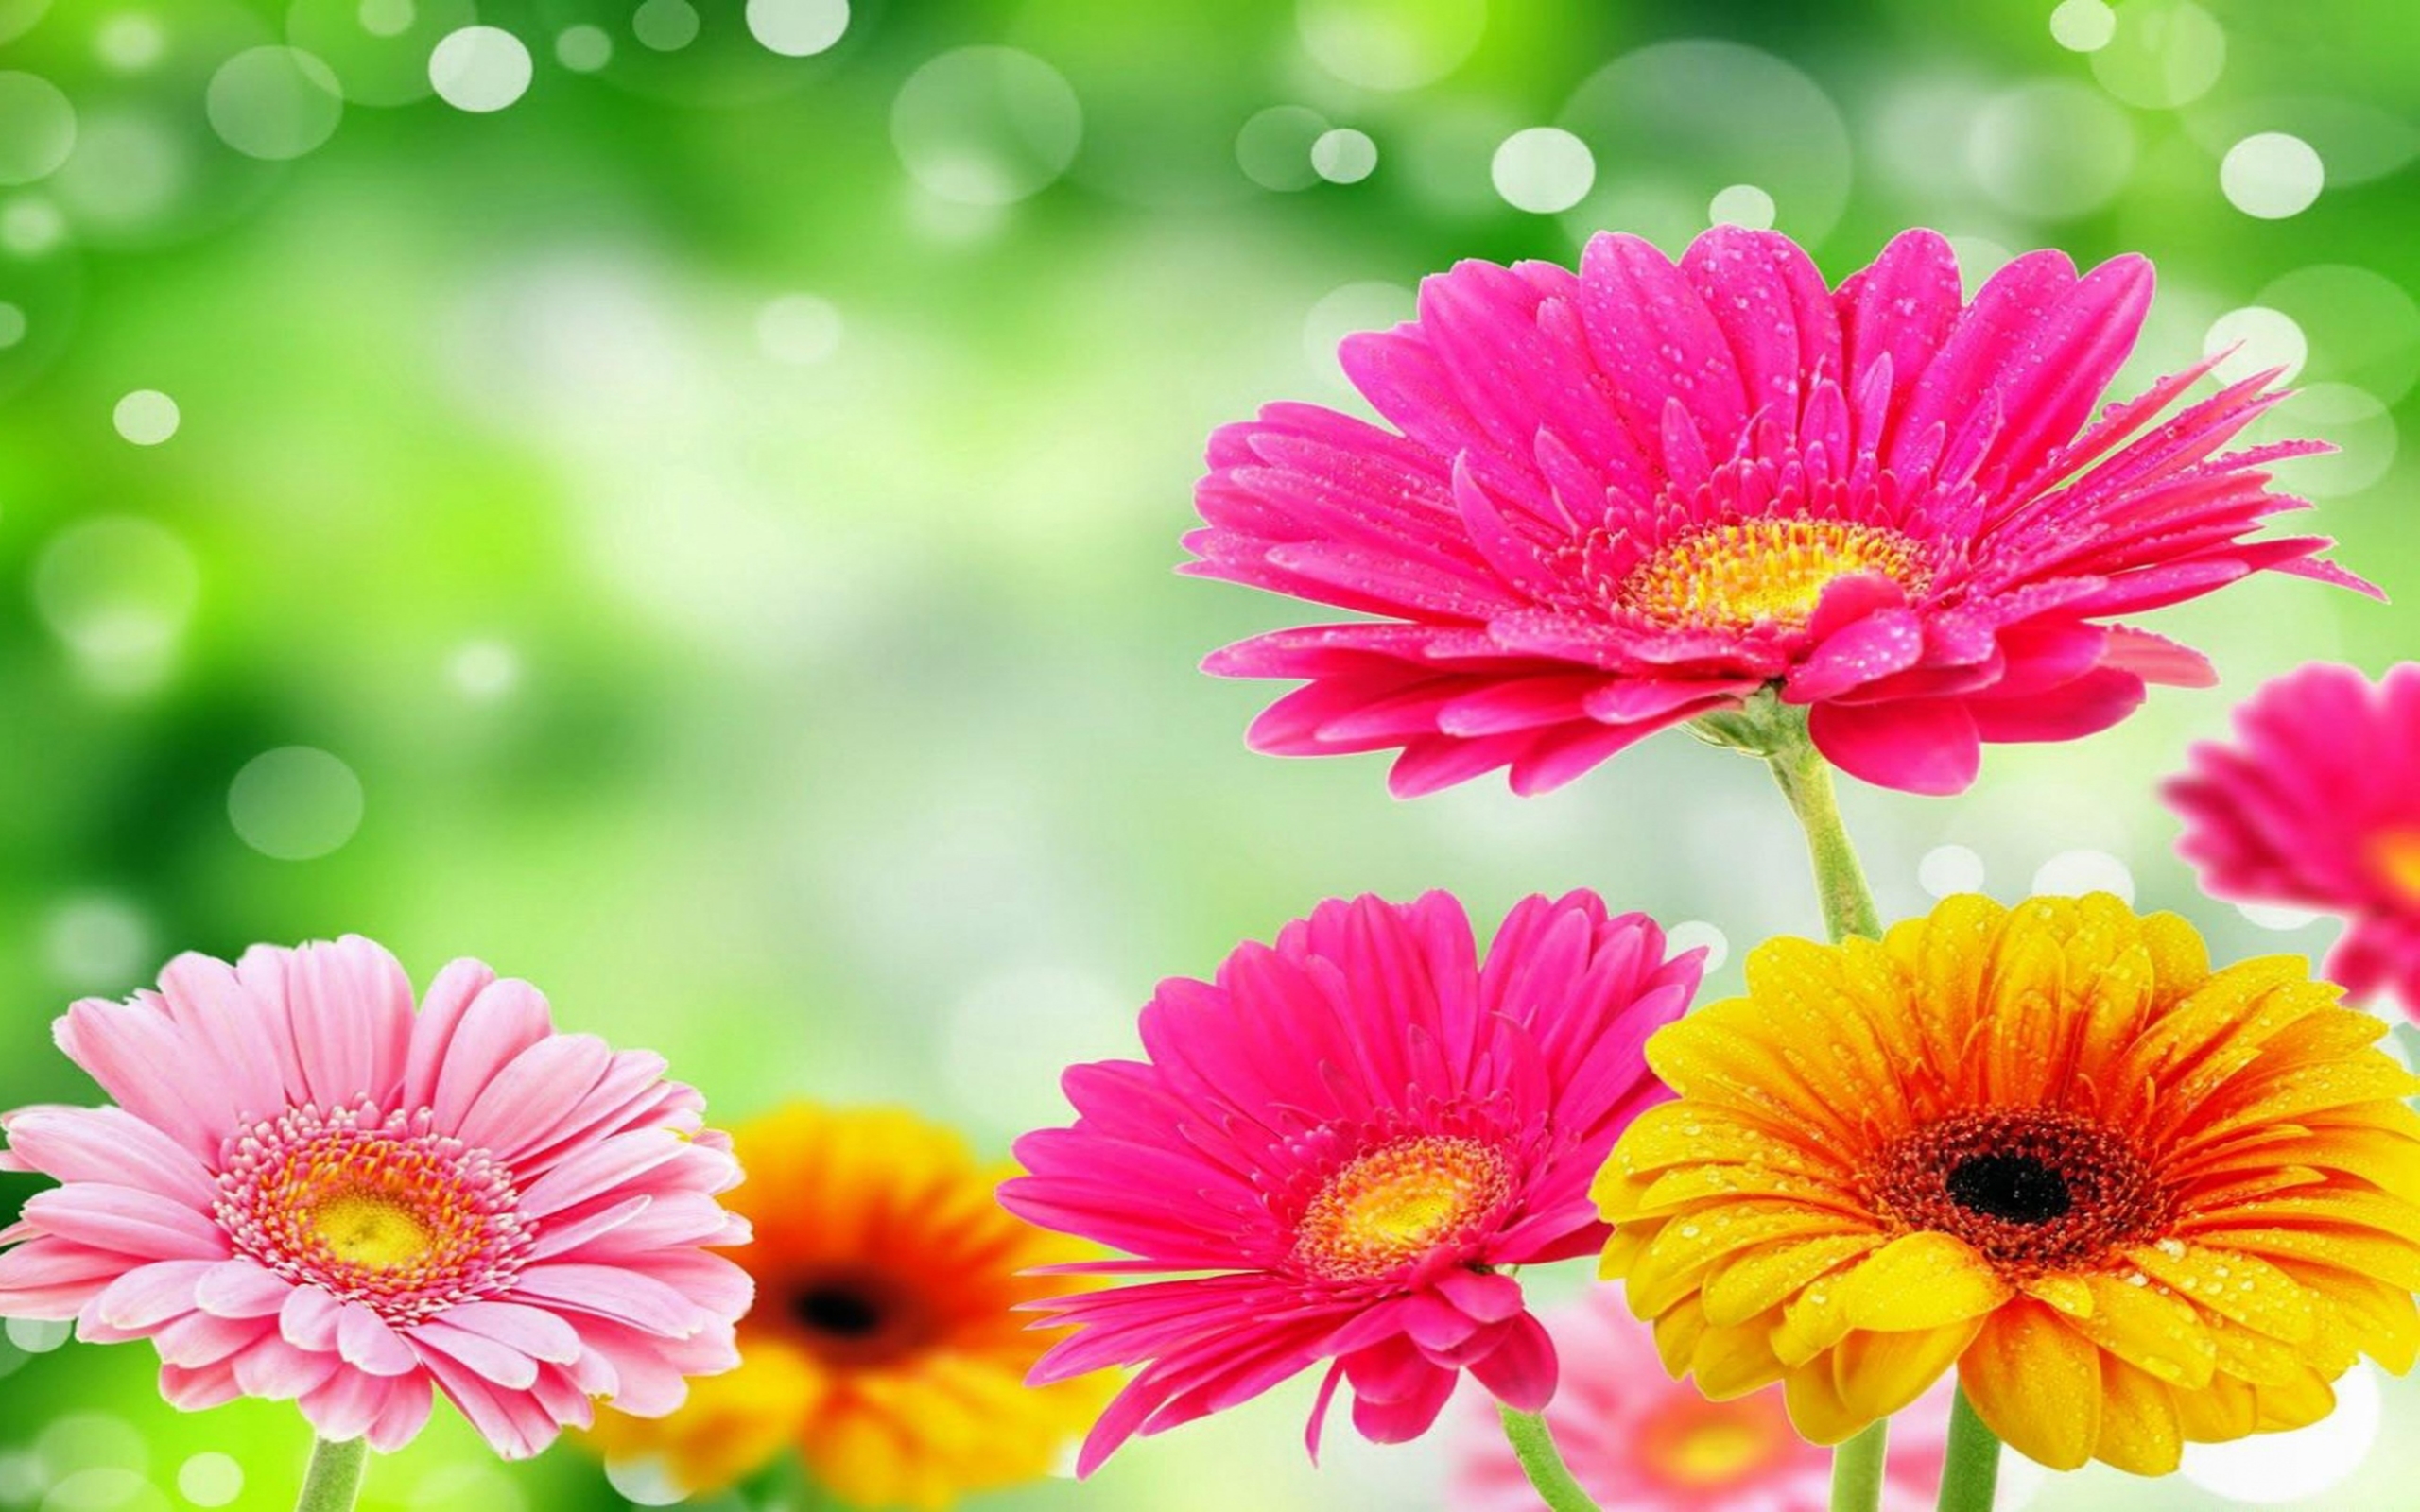 Handy-Wallpaper Natur, Blumen, Gerbera, Blume, Frühling, Bokeh, Gelbe Blume, Erde/natur, Pinke Blume kostenlos herunterladen.